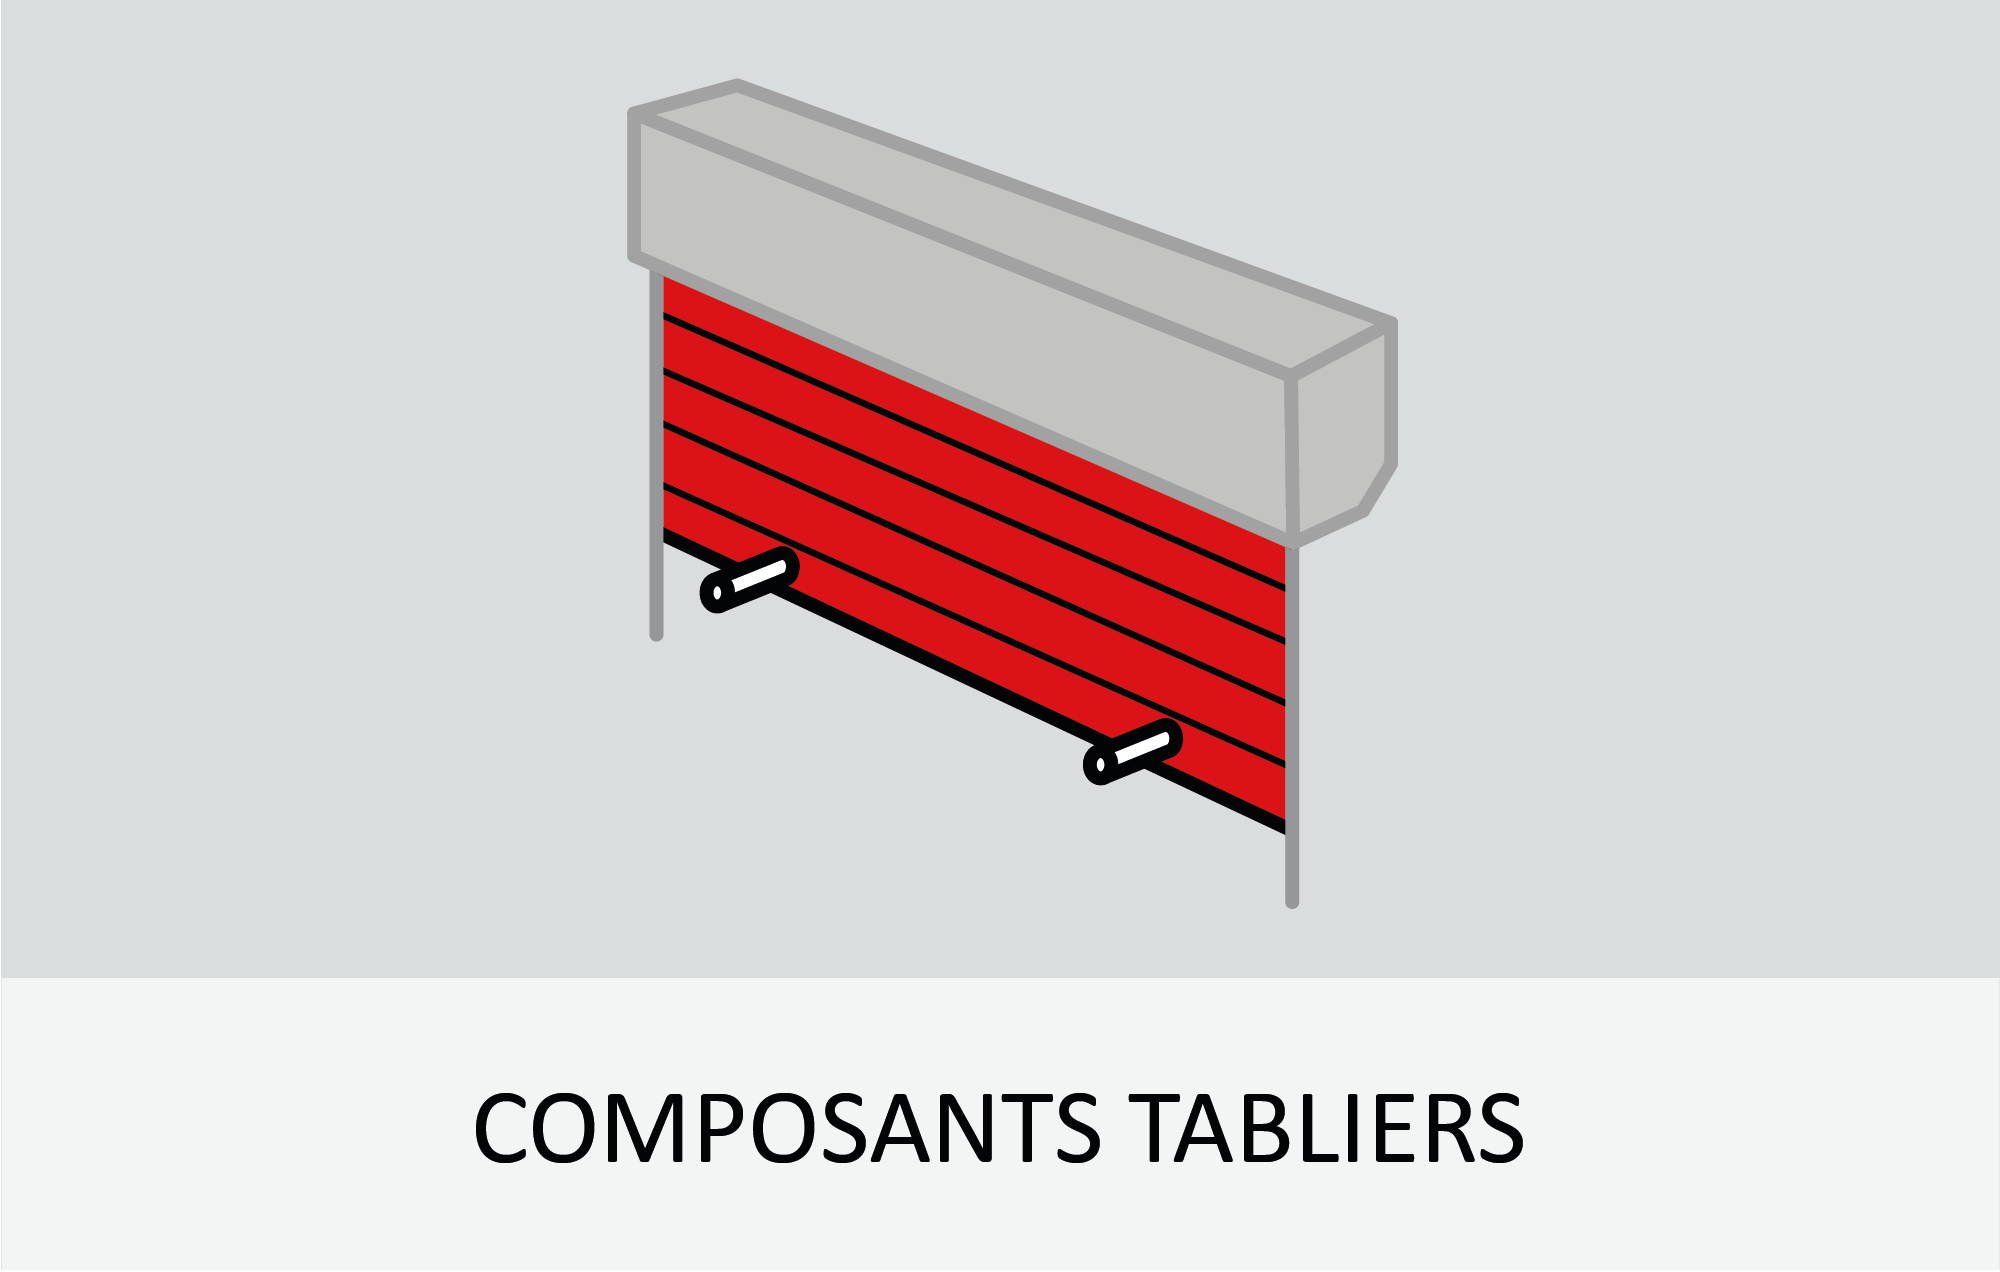 Composants tabliers Easypoz